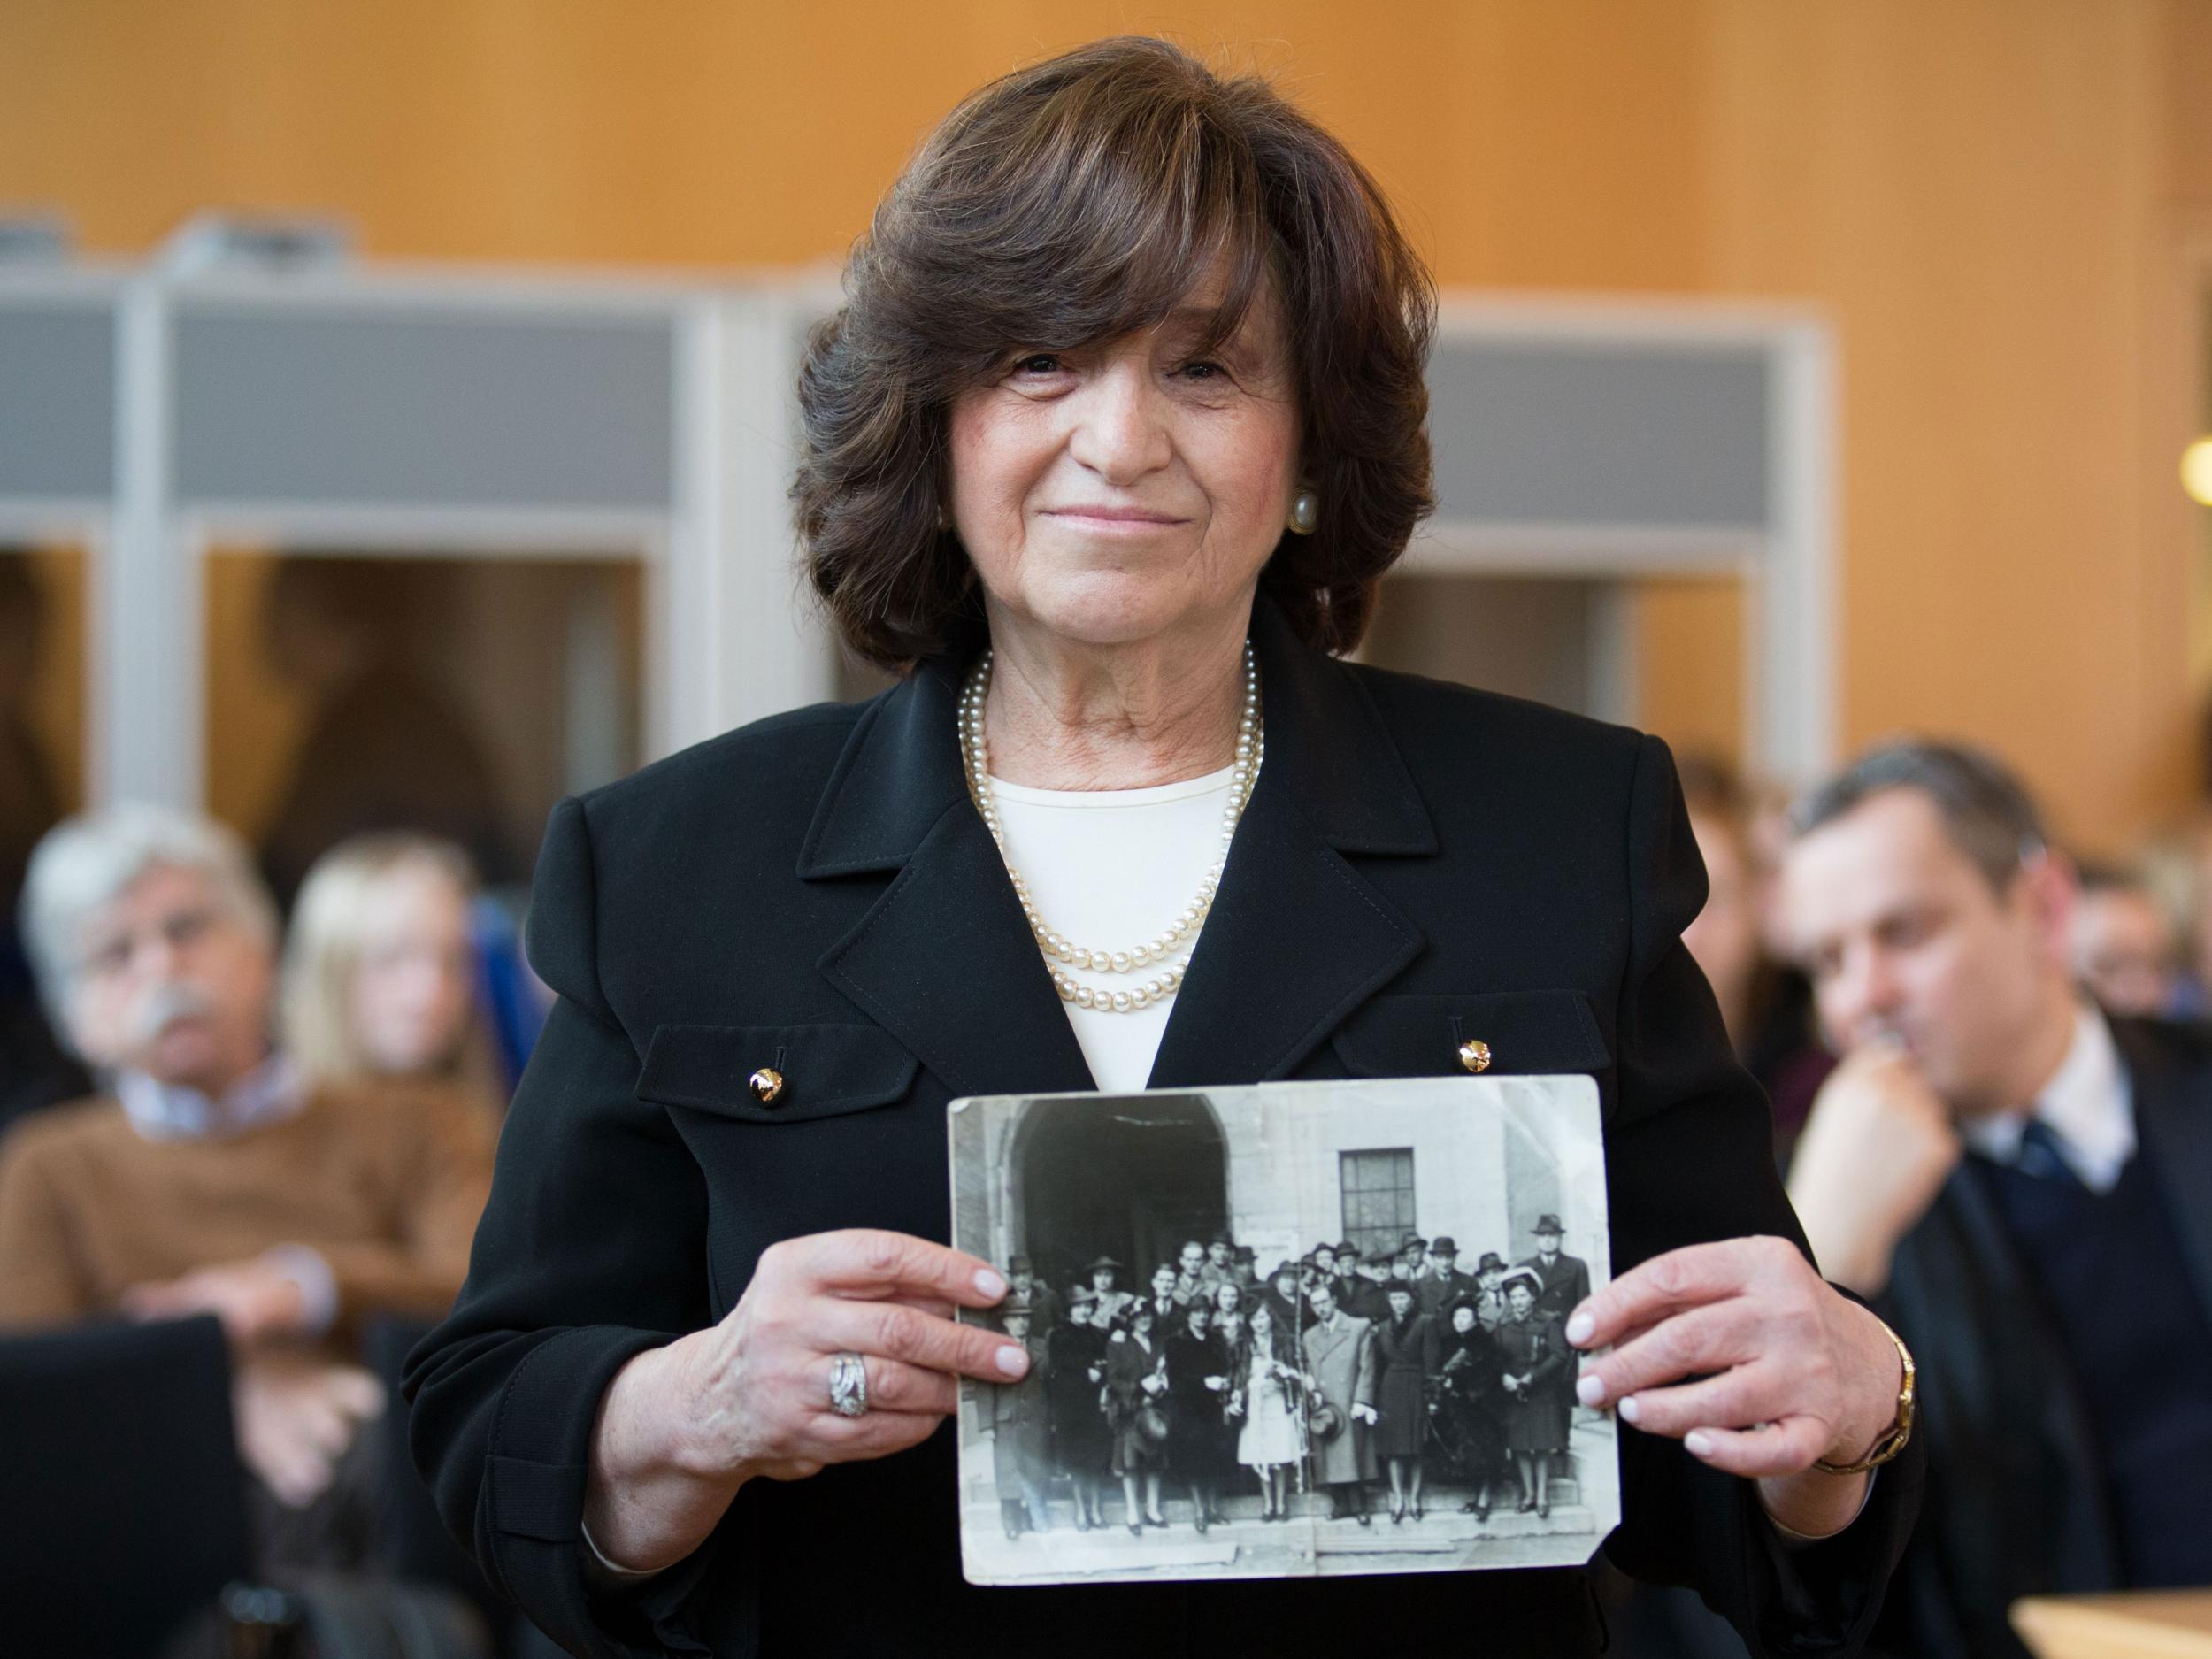 Angela Orosz was born in the Auschwitz conentration camp on 21 December 1944